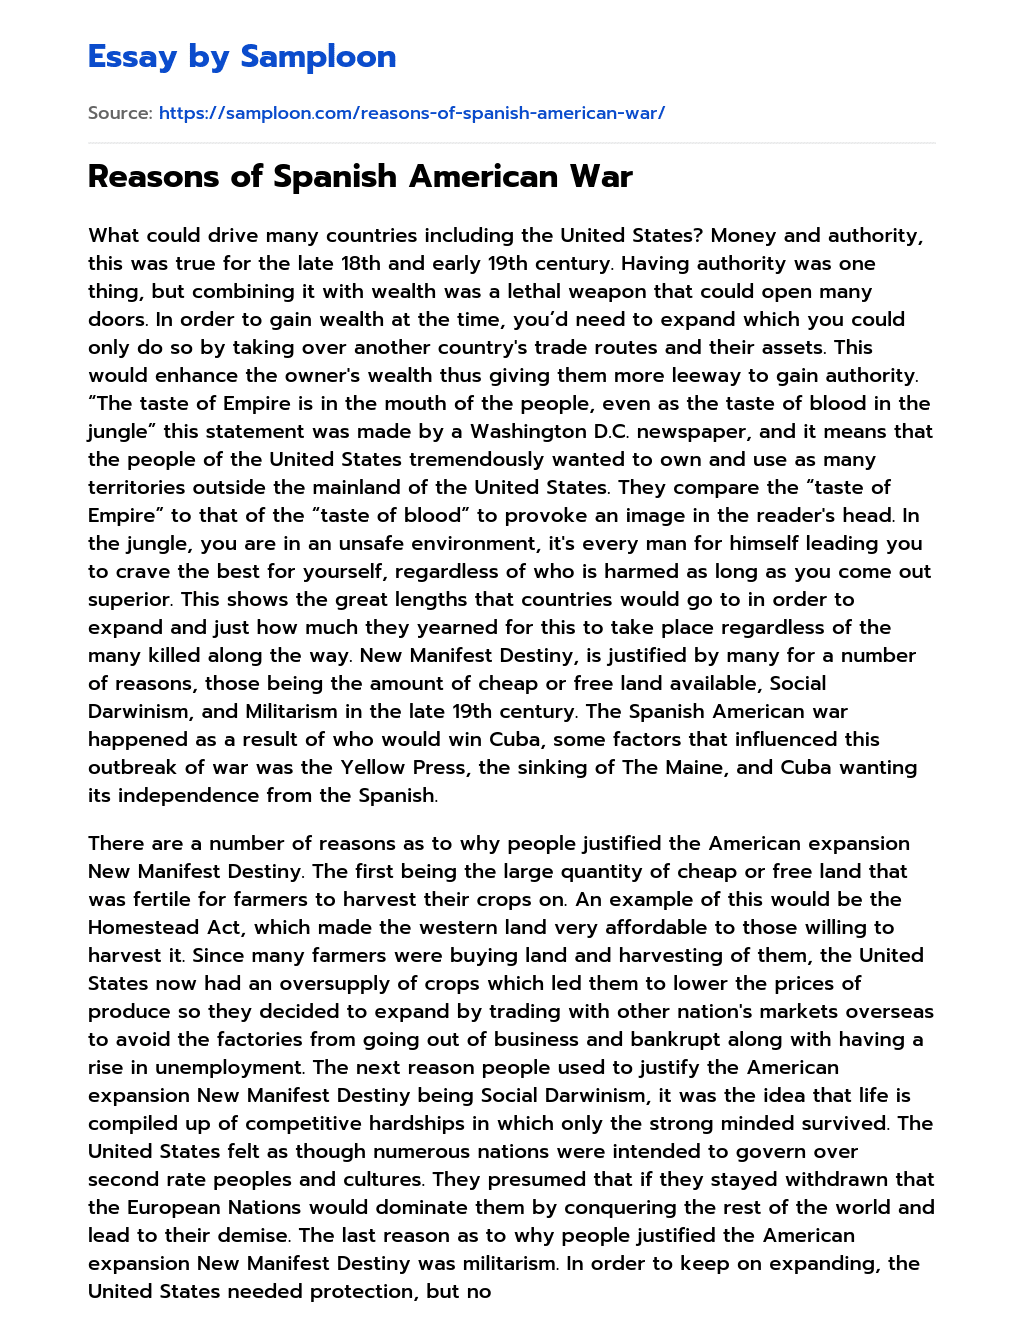 Reasons of Spanish American War essay